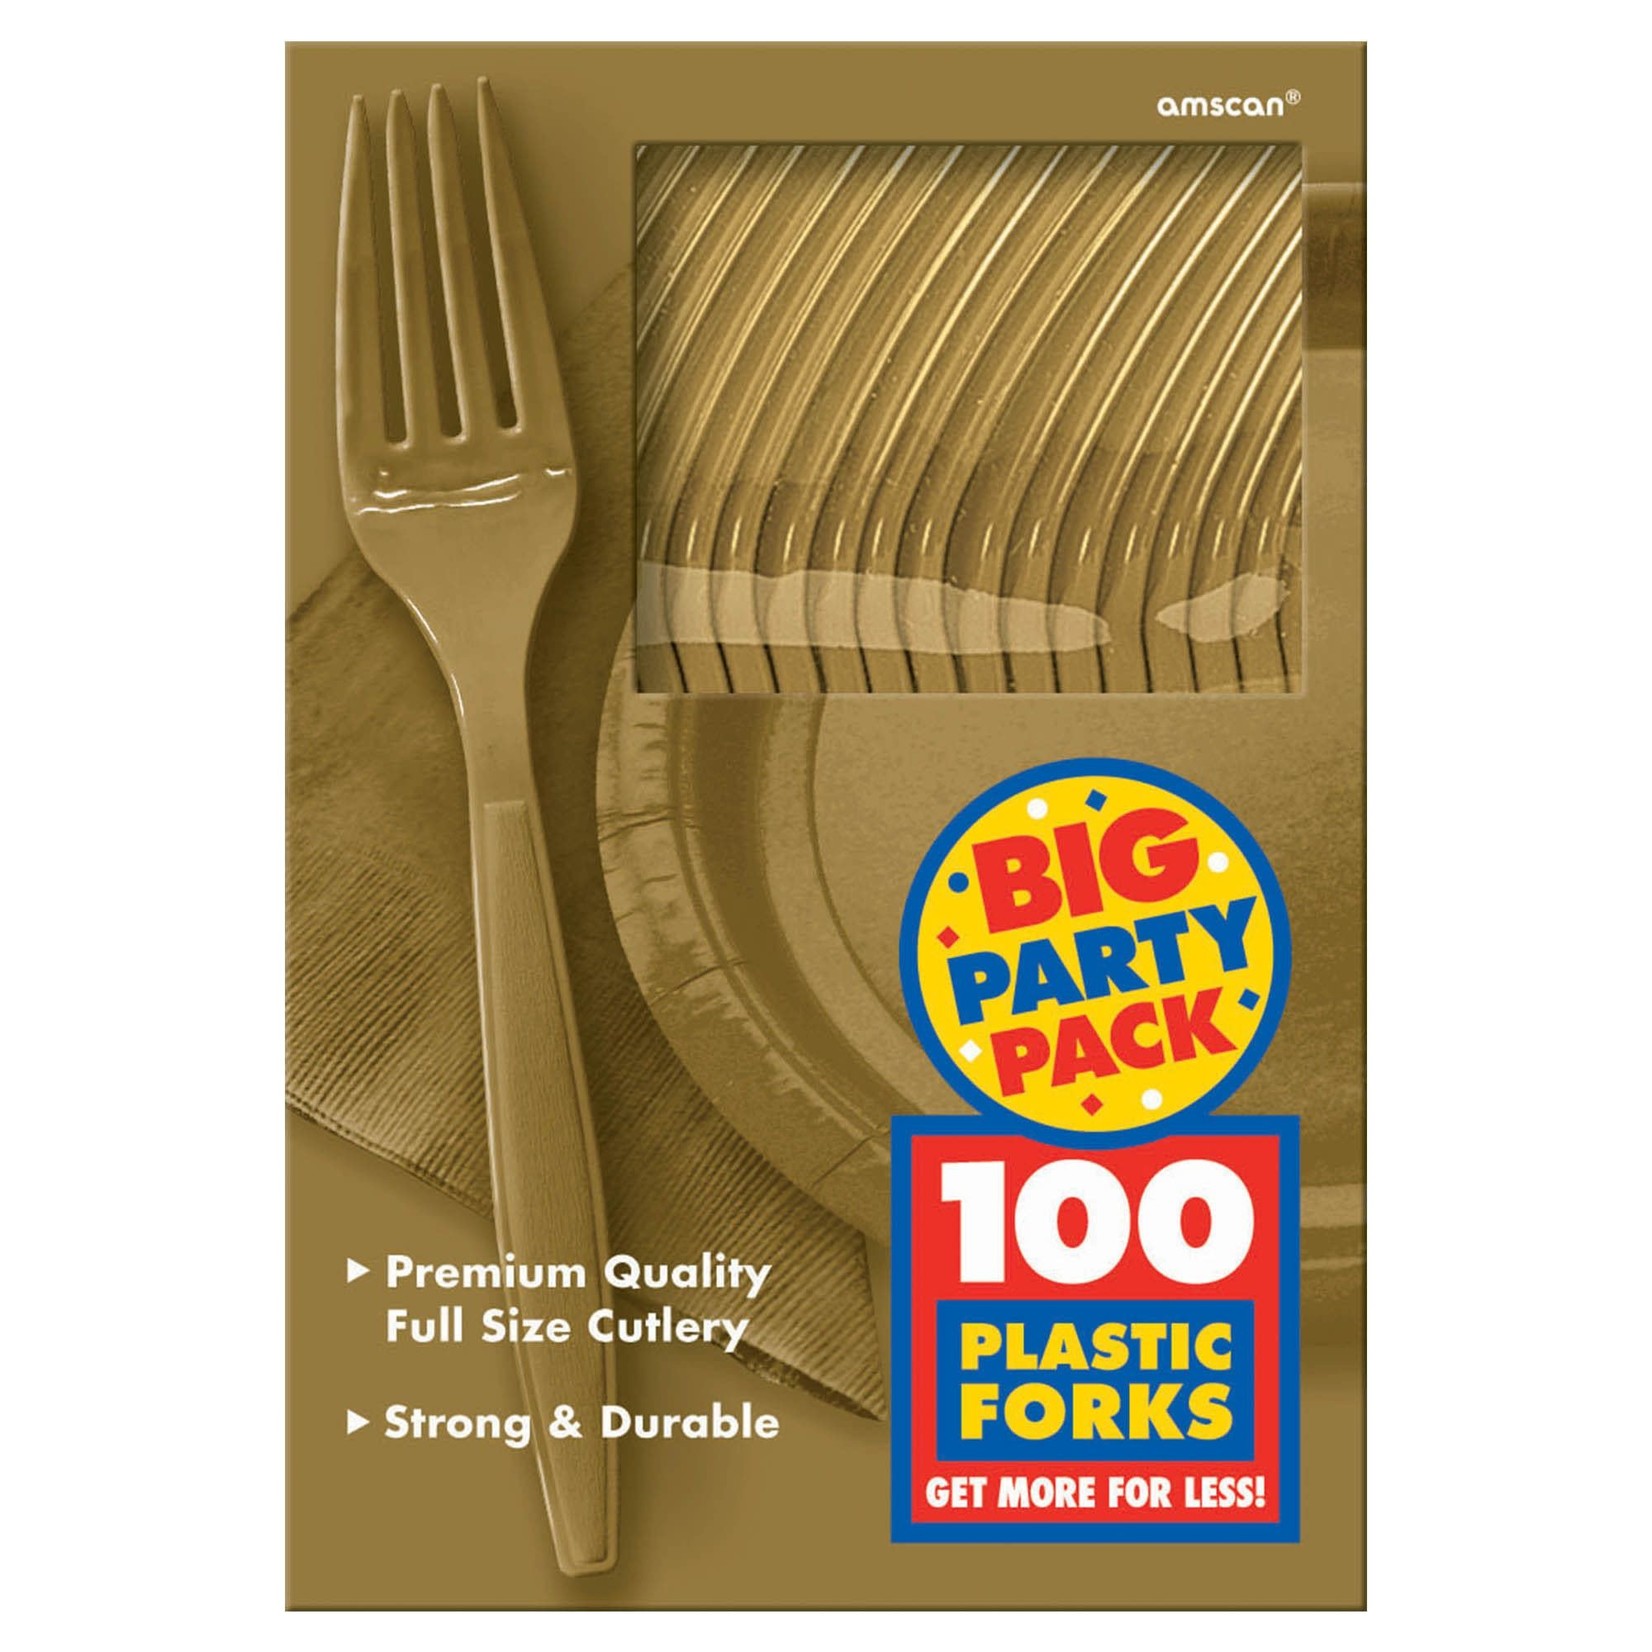 Big Party Pack Plastic Forks - Gold